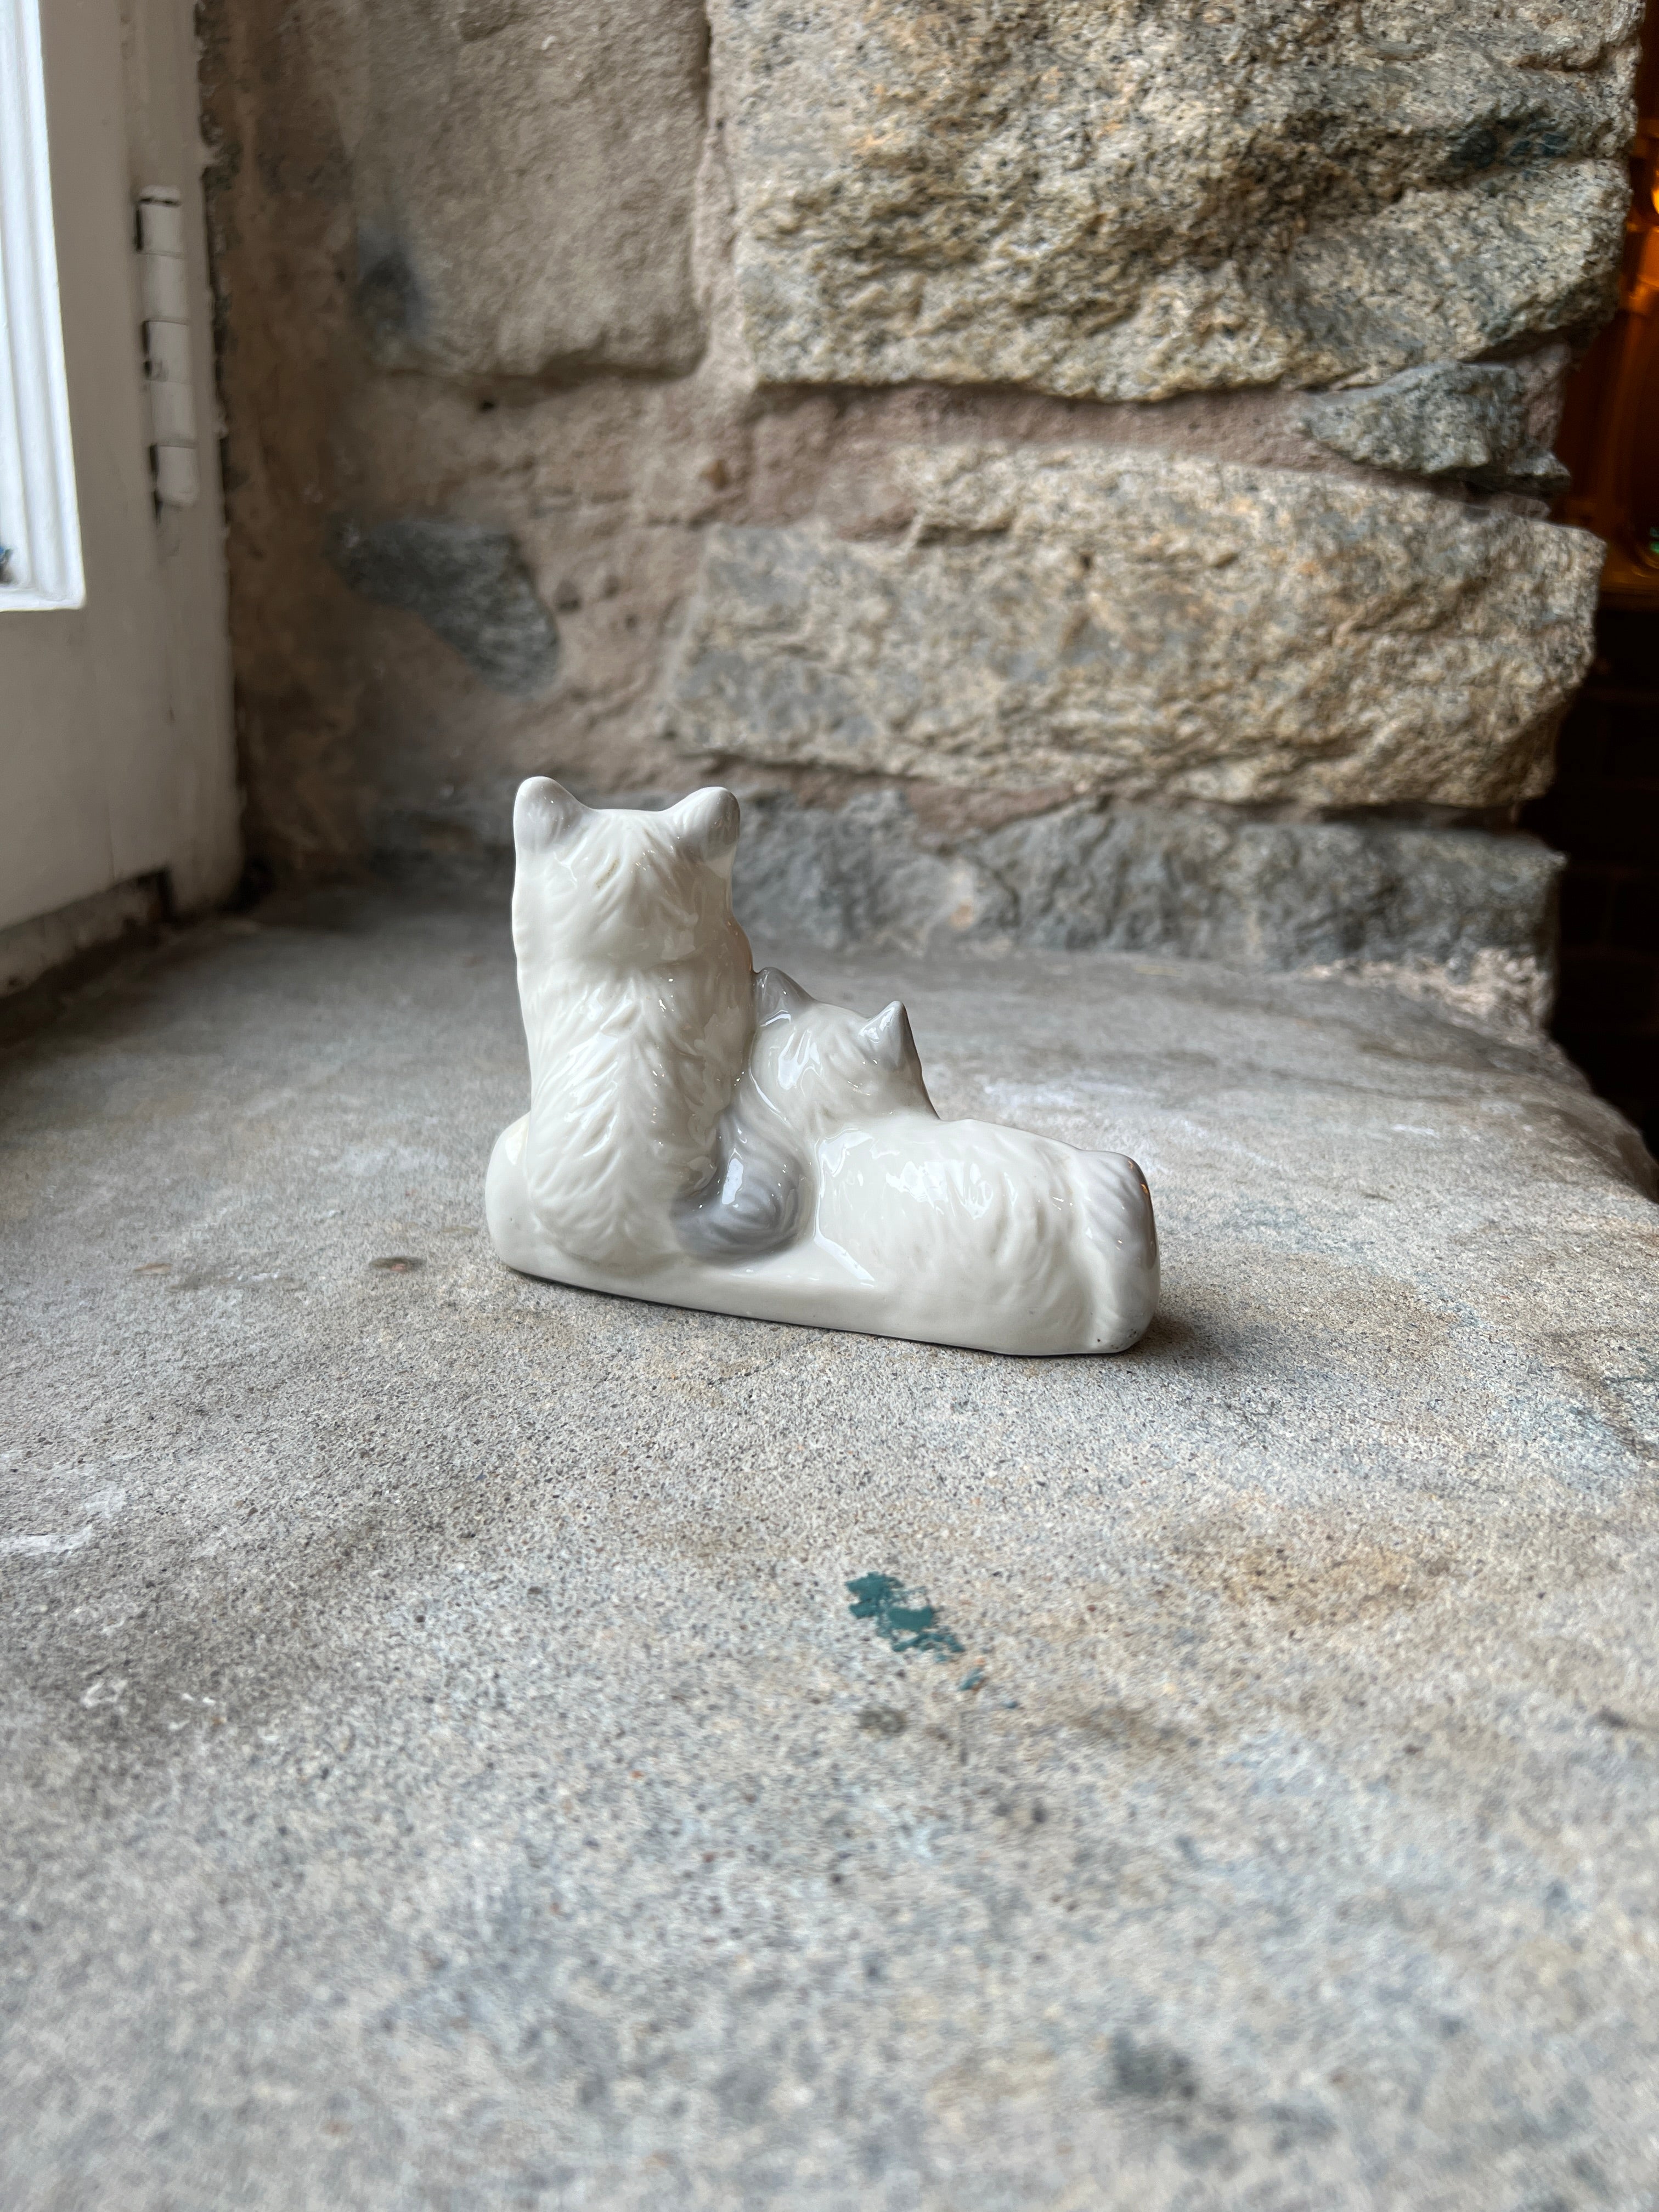 Pair of Ceramic White Cats